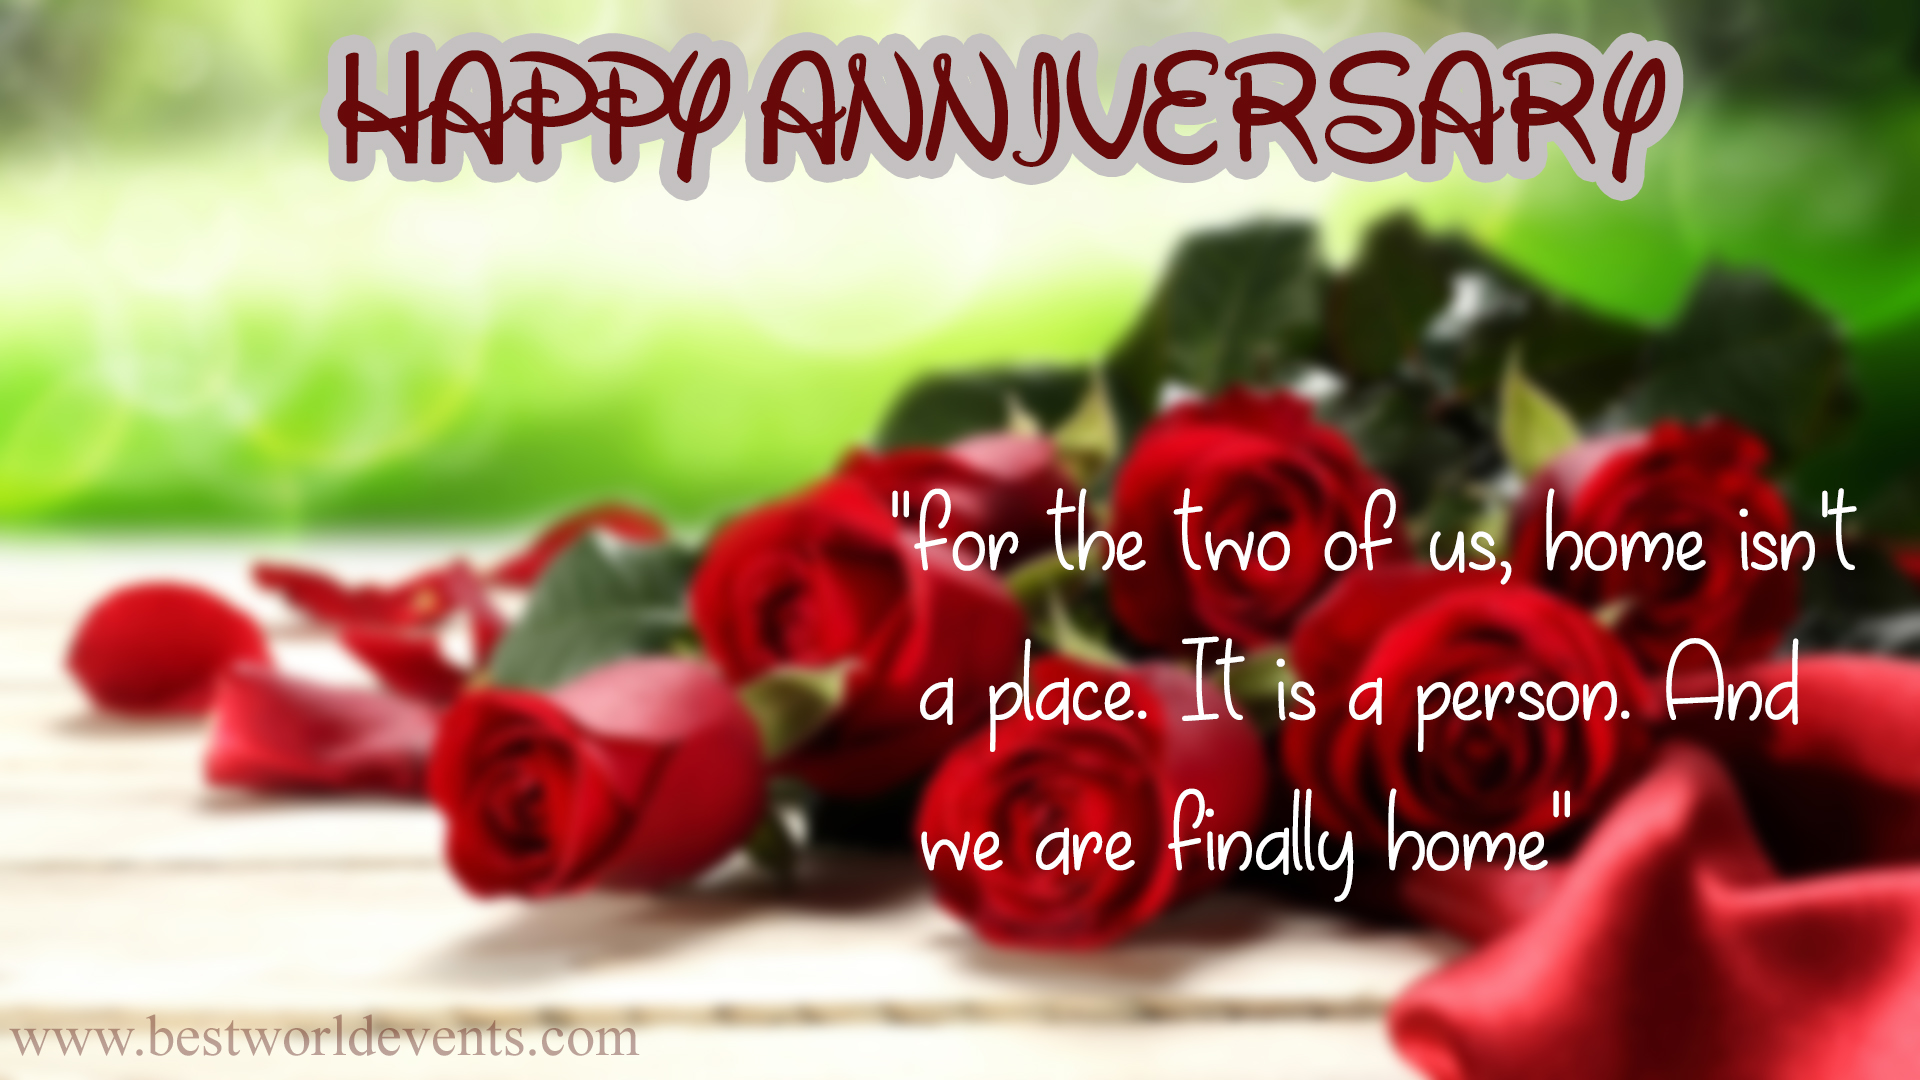 Happy anniversary wishes